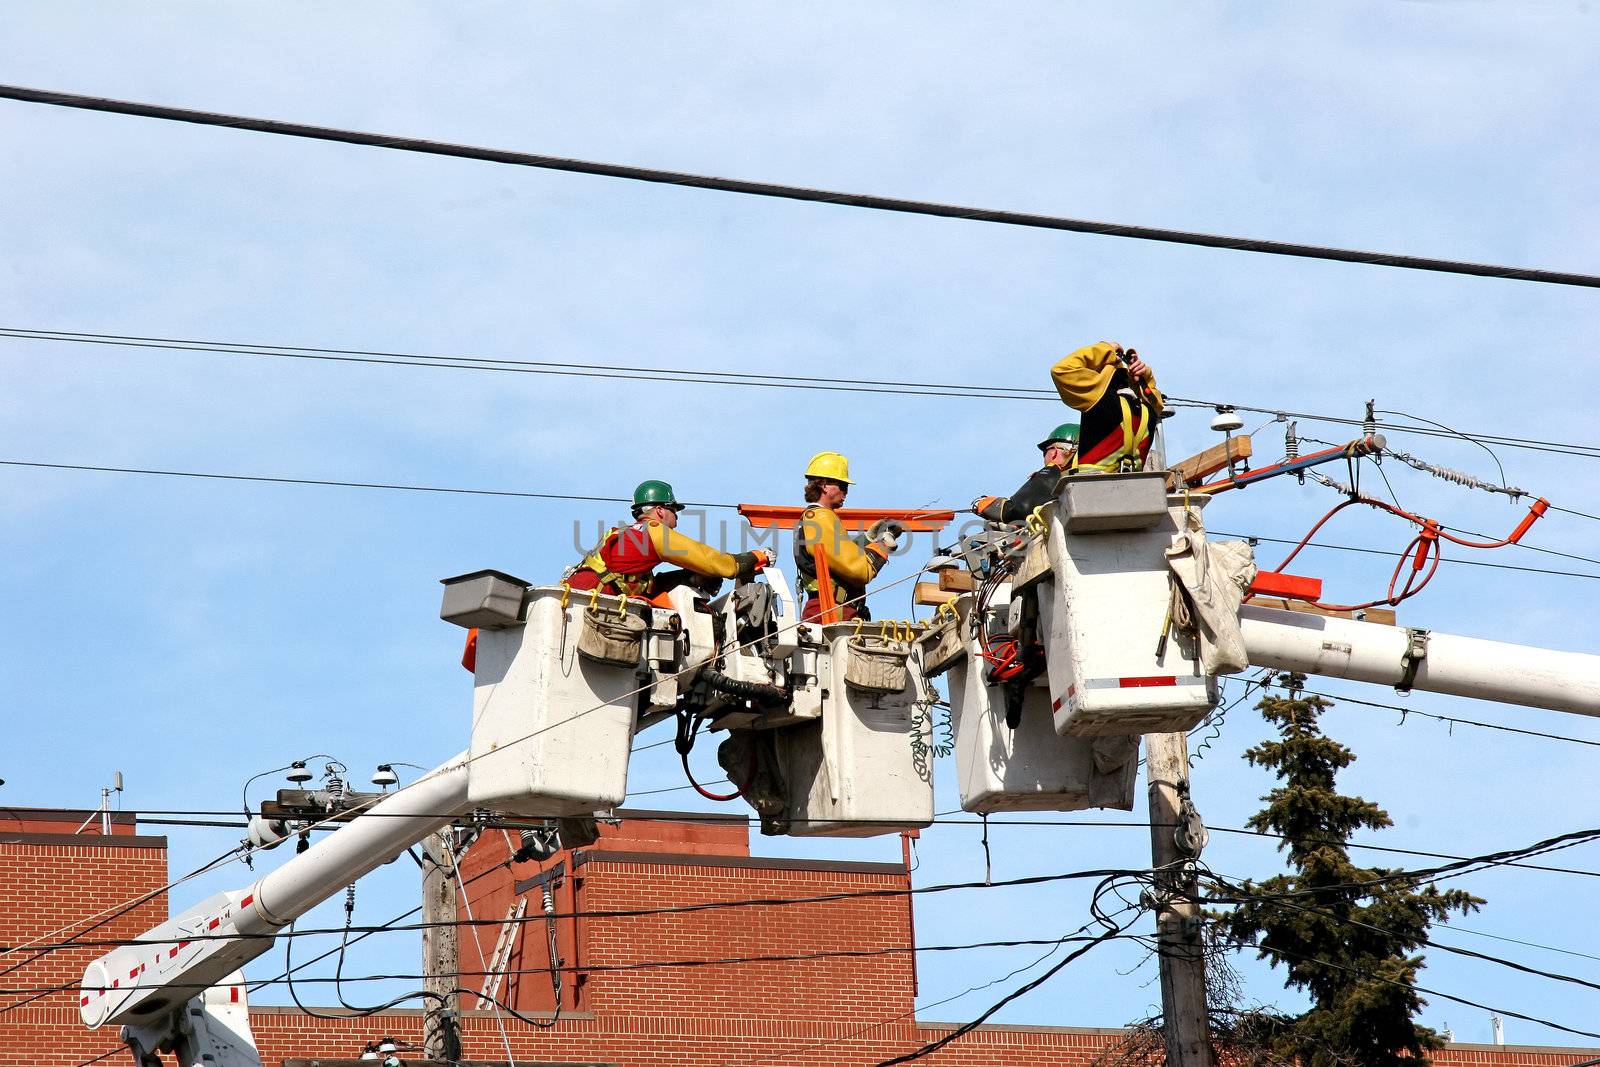 City workers repairing electrical overhead wiring